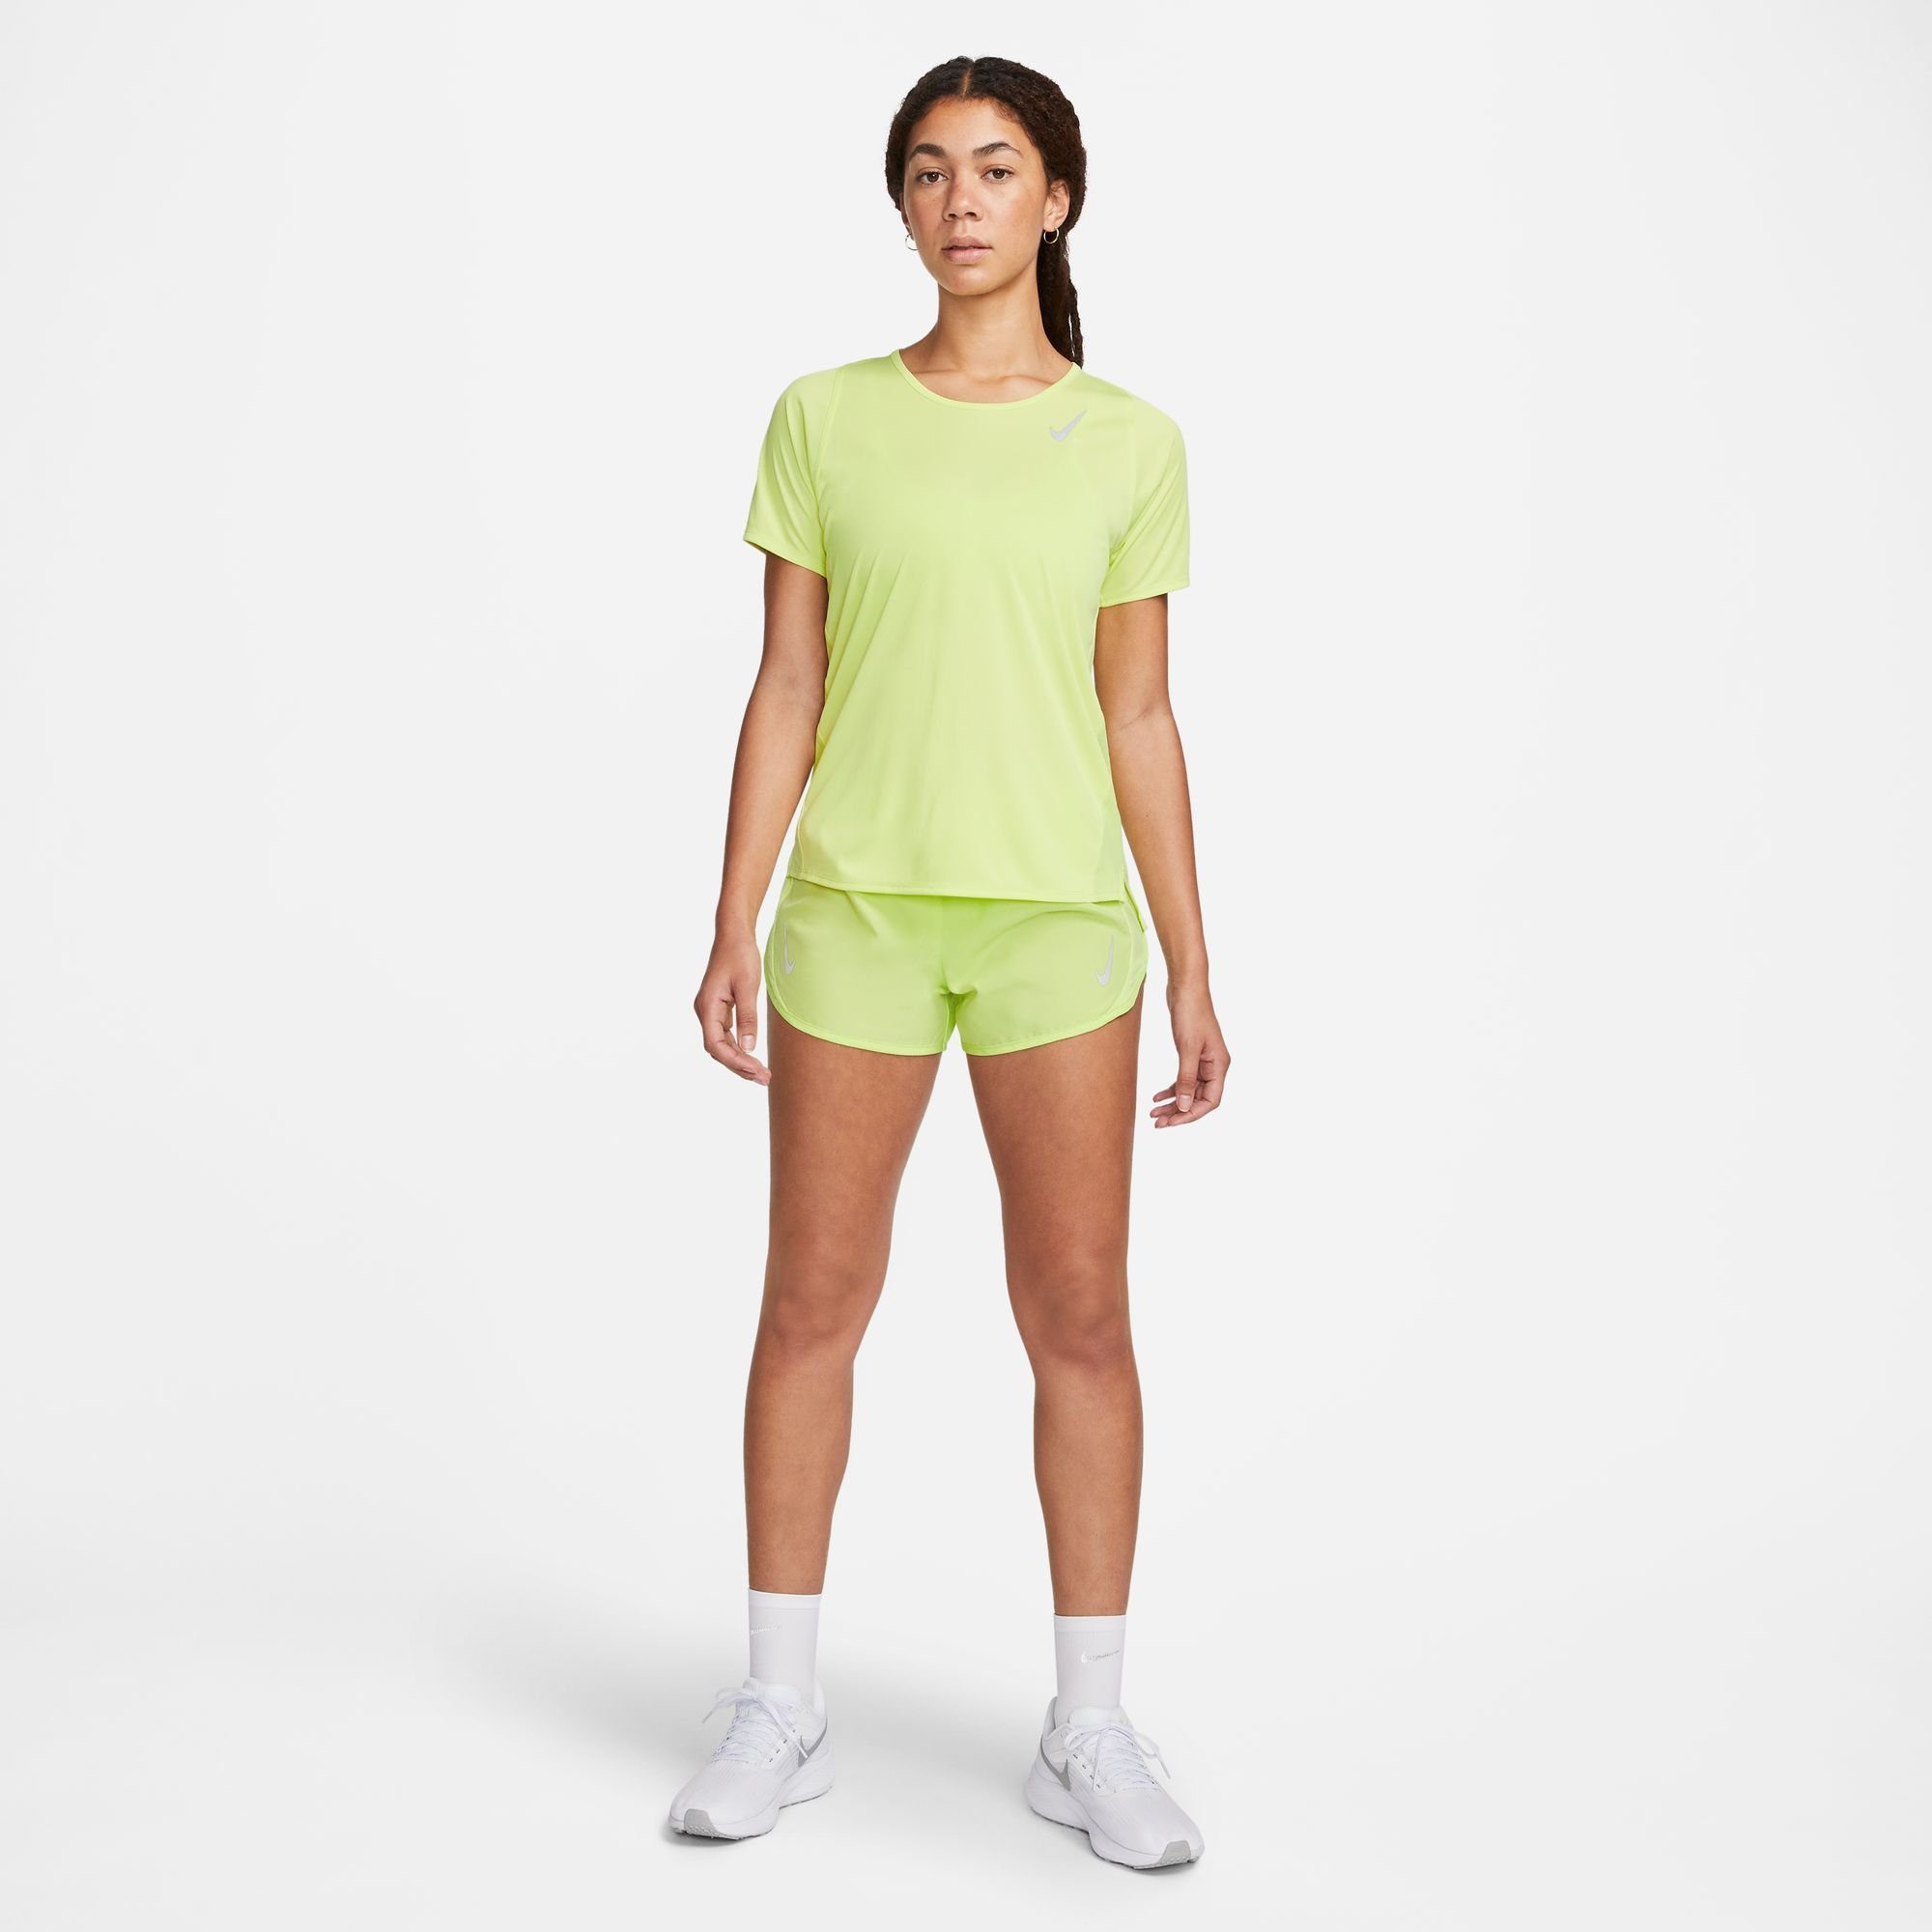 SHORT-SLEEVE DRI-FIT Laufshirt Nike WOMEN'S RACE RUNNING TOP LT SILV LEMON TWIST/REFLECTIVE